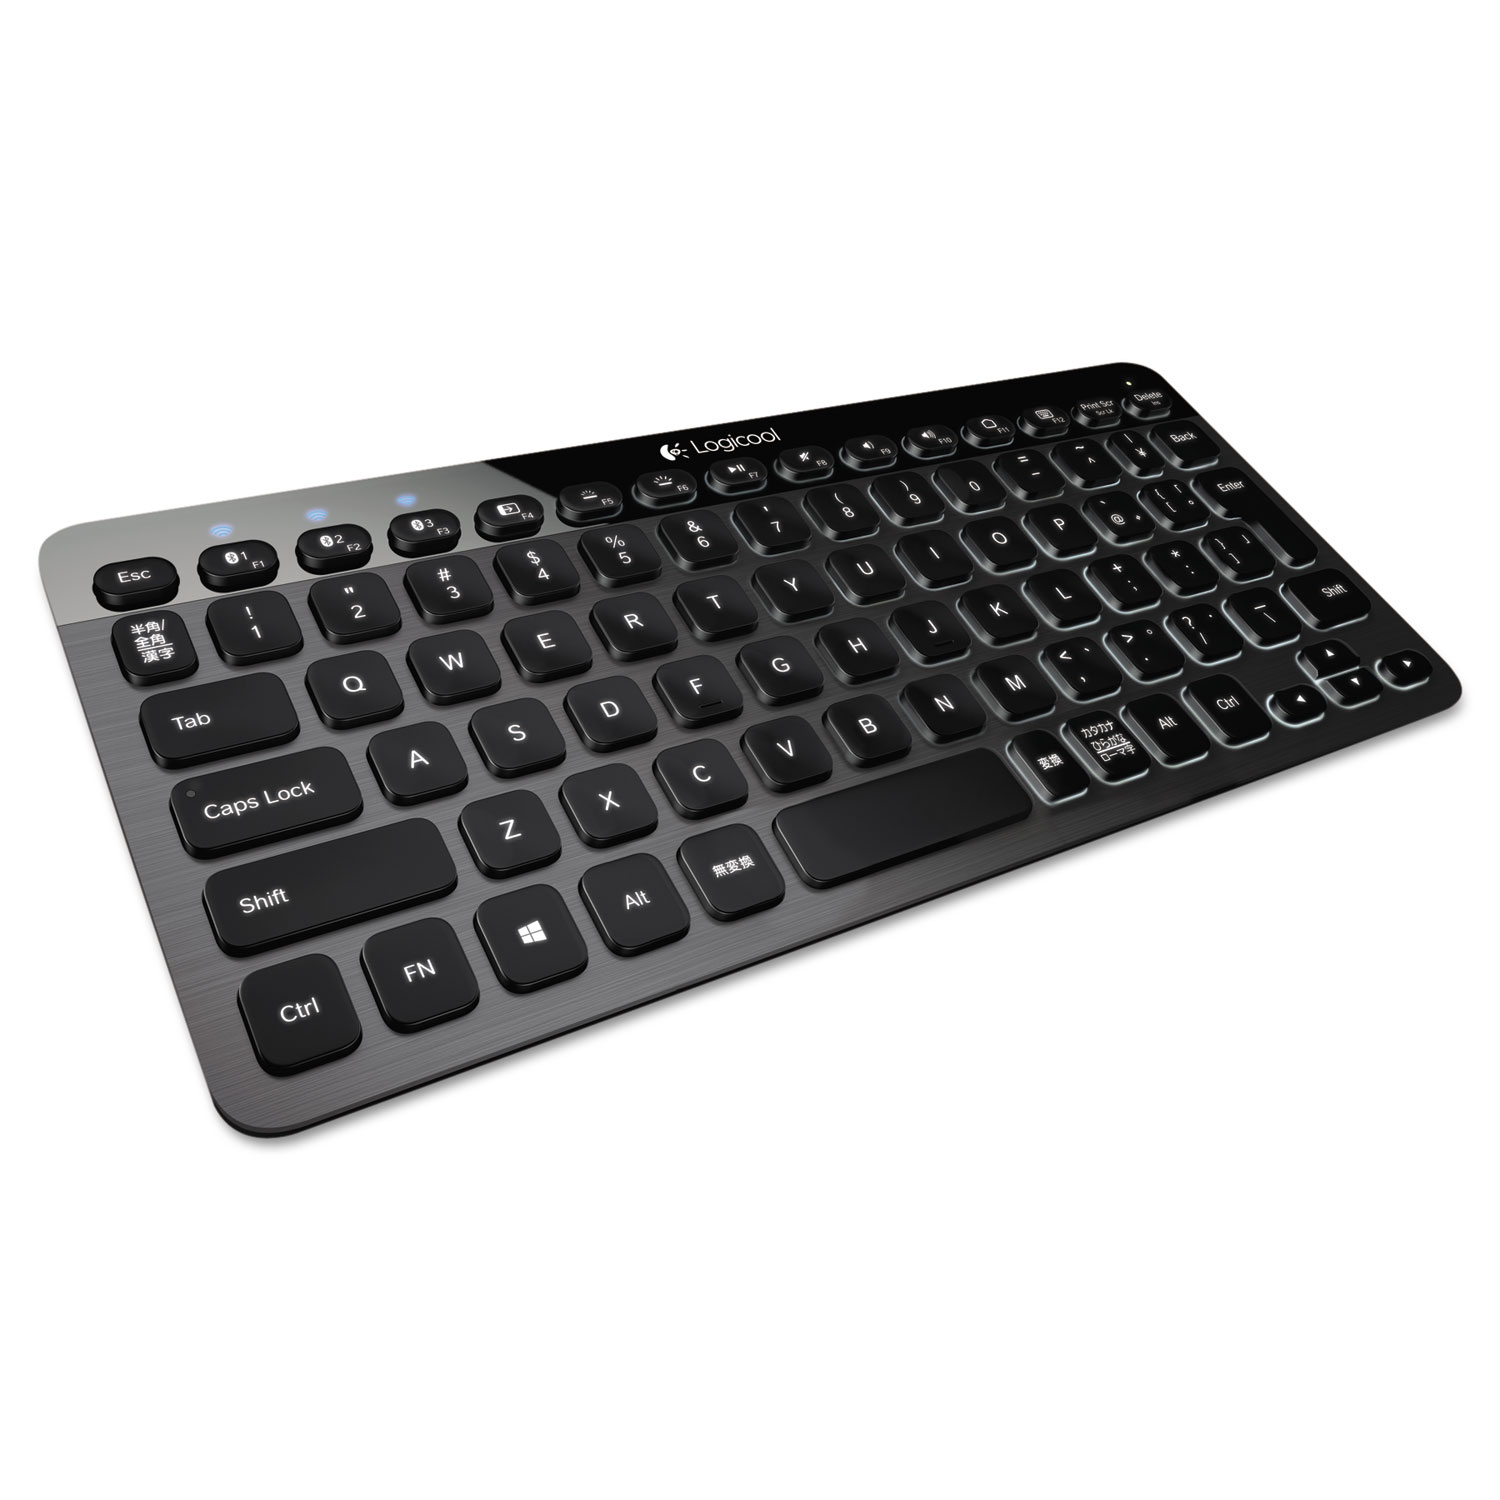 K810 Illuminated Keyboard, Bluetooth, Black